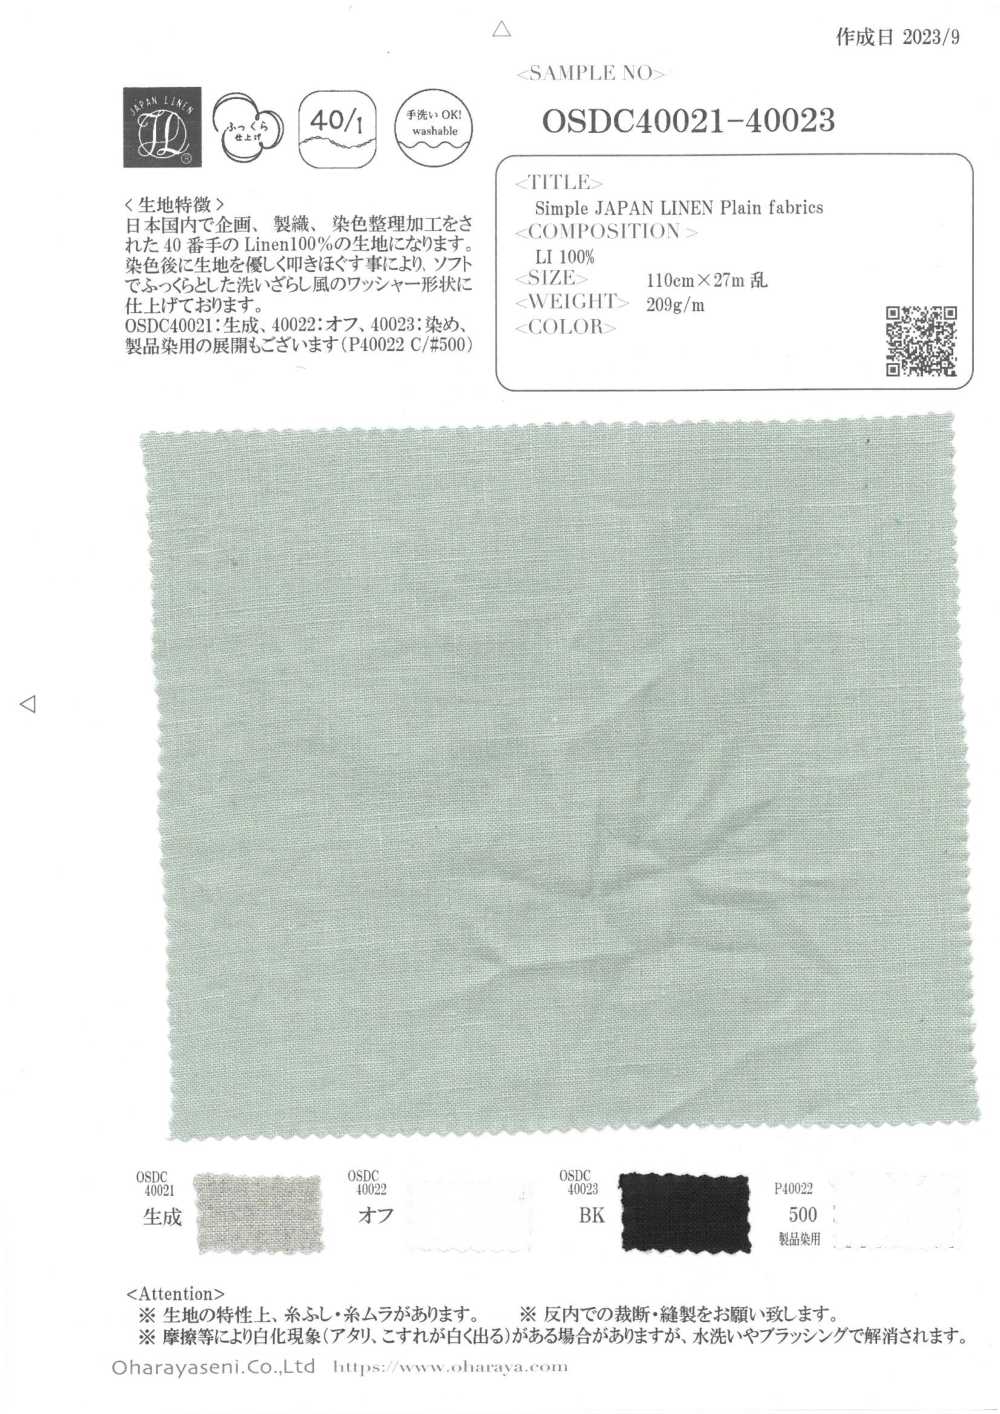 OSDC40023 Simple JAPAN LINEN Plain fabrics (컬러)[원단] Oharayaseni